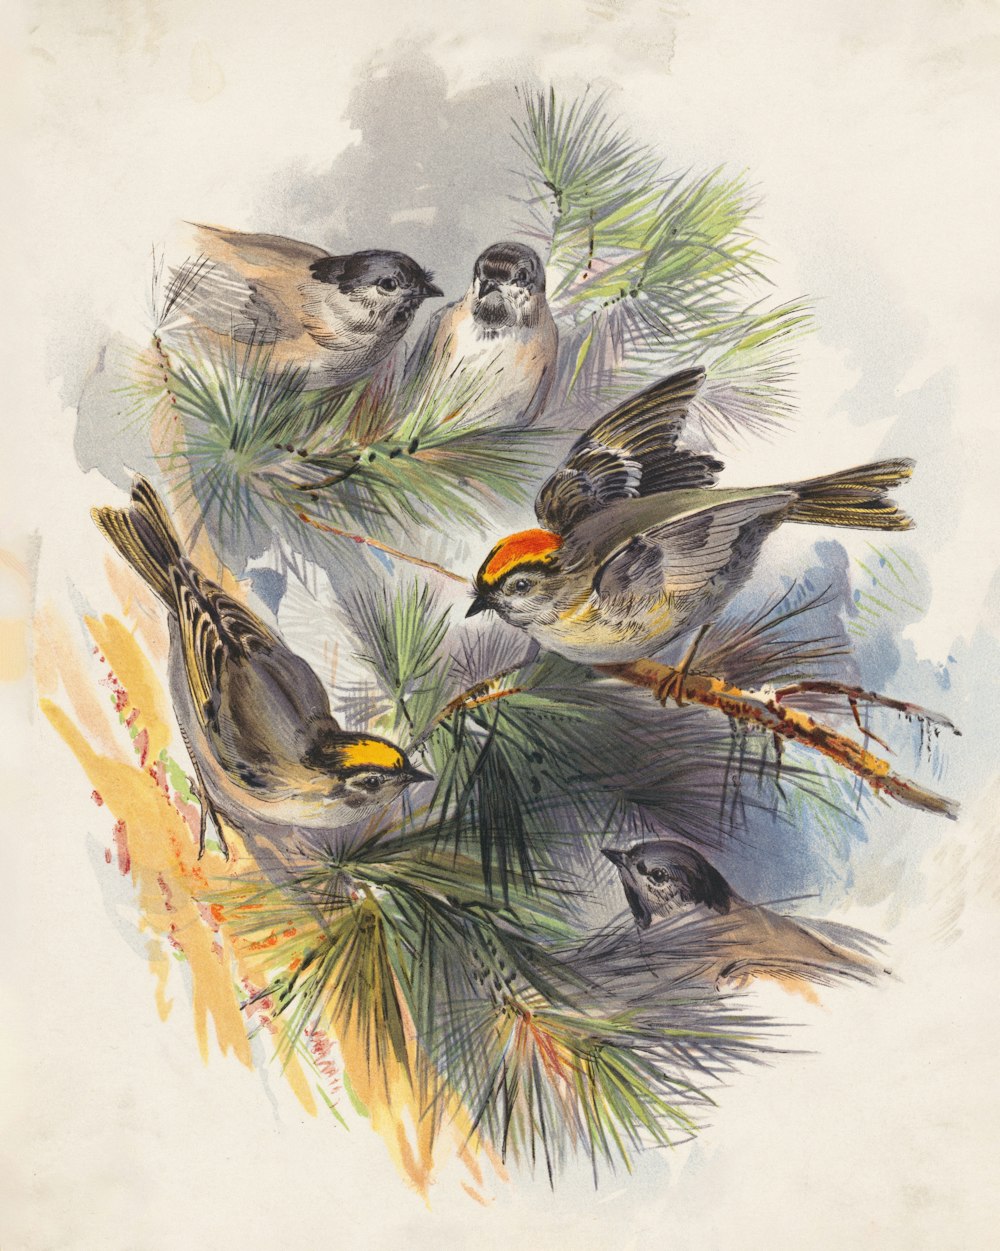 un gruppo di uccelli seduti in cima a un pino